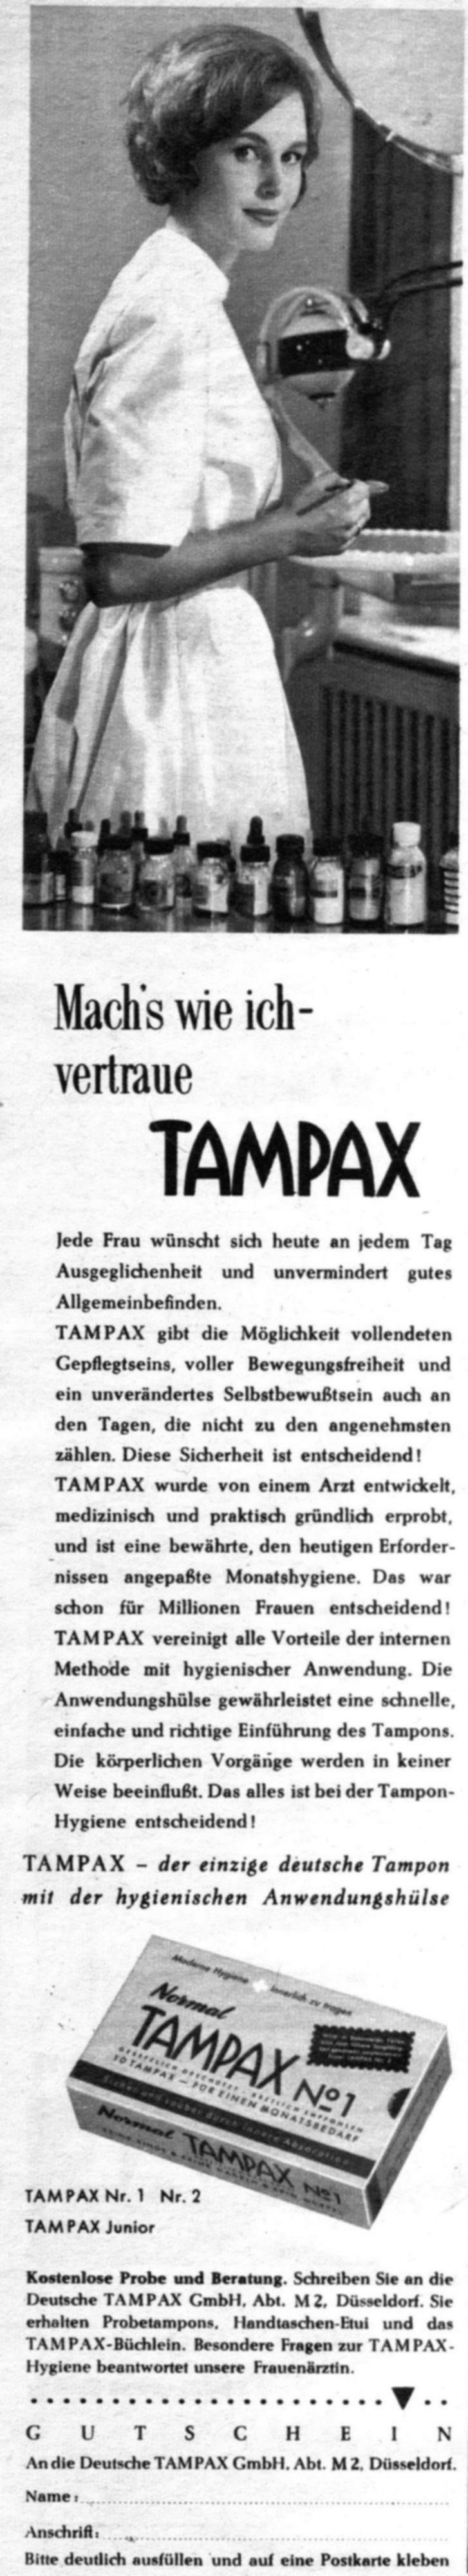 Tampax 1960 201.jpg